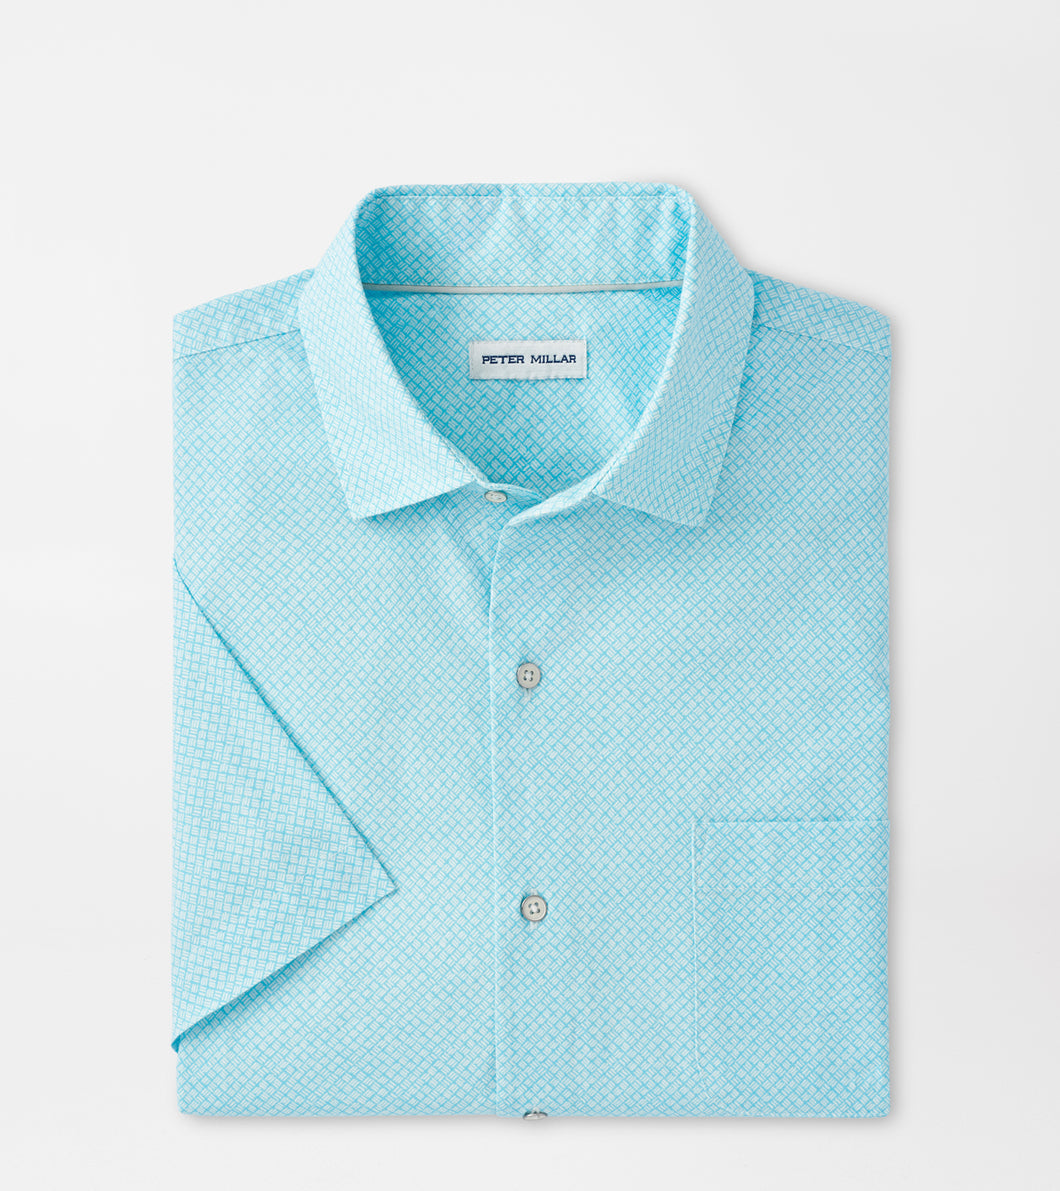 Peter Millar Piers Cotton-Stretch Sport Shirt in Mint Blue